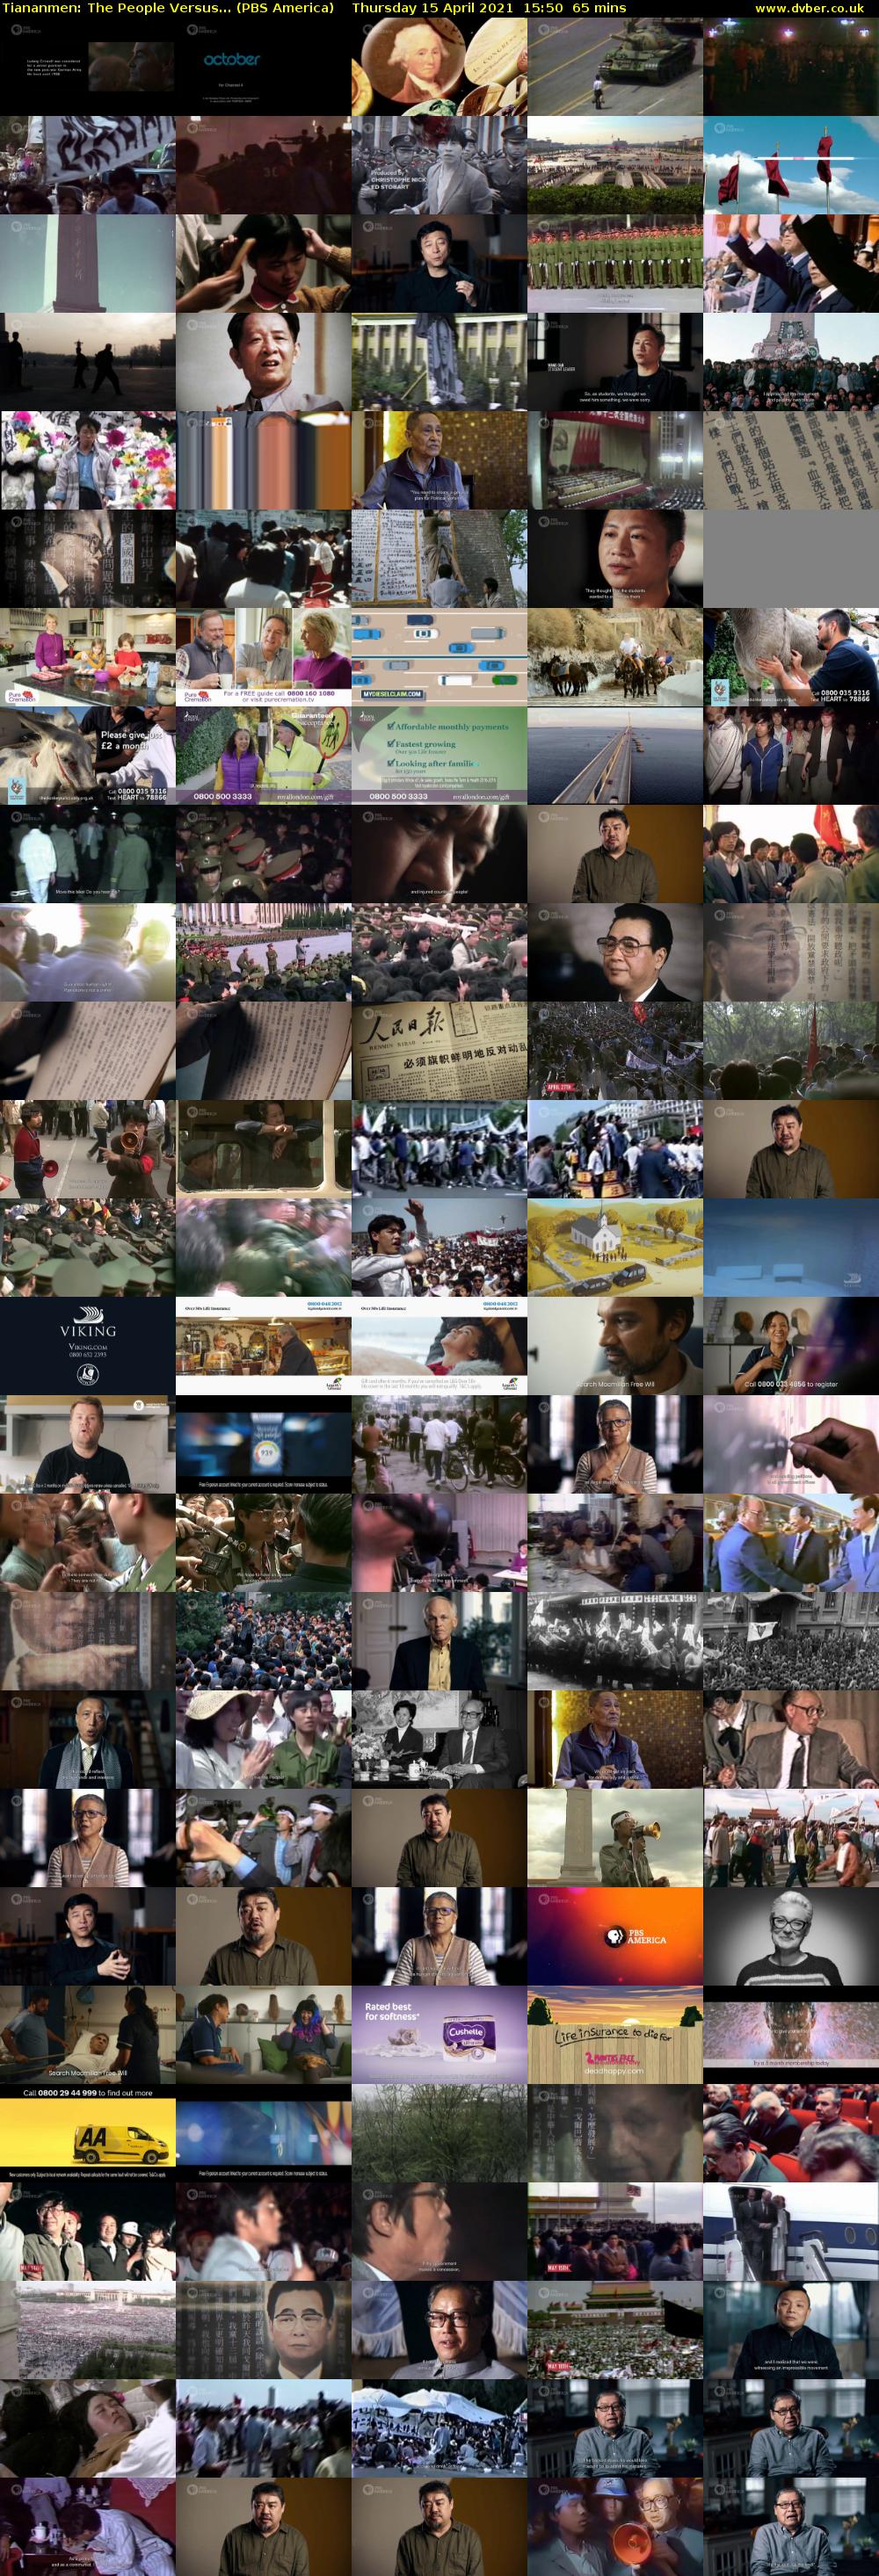 Tiananmen: The People Versus... (PBS America) Thursday 15 April 2021 15:50 - 16:55